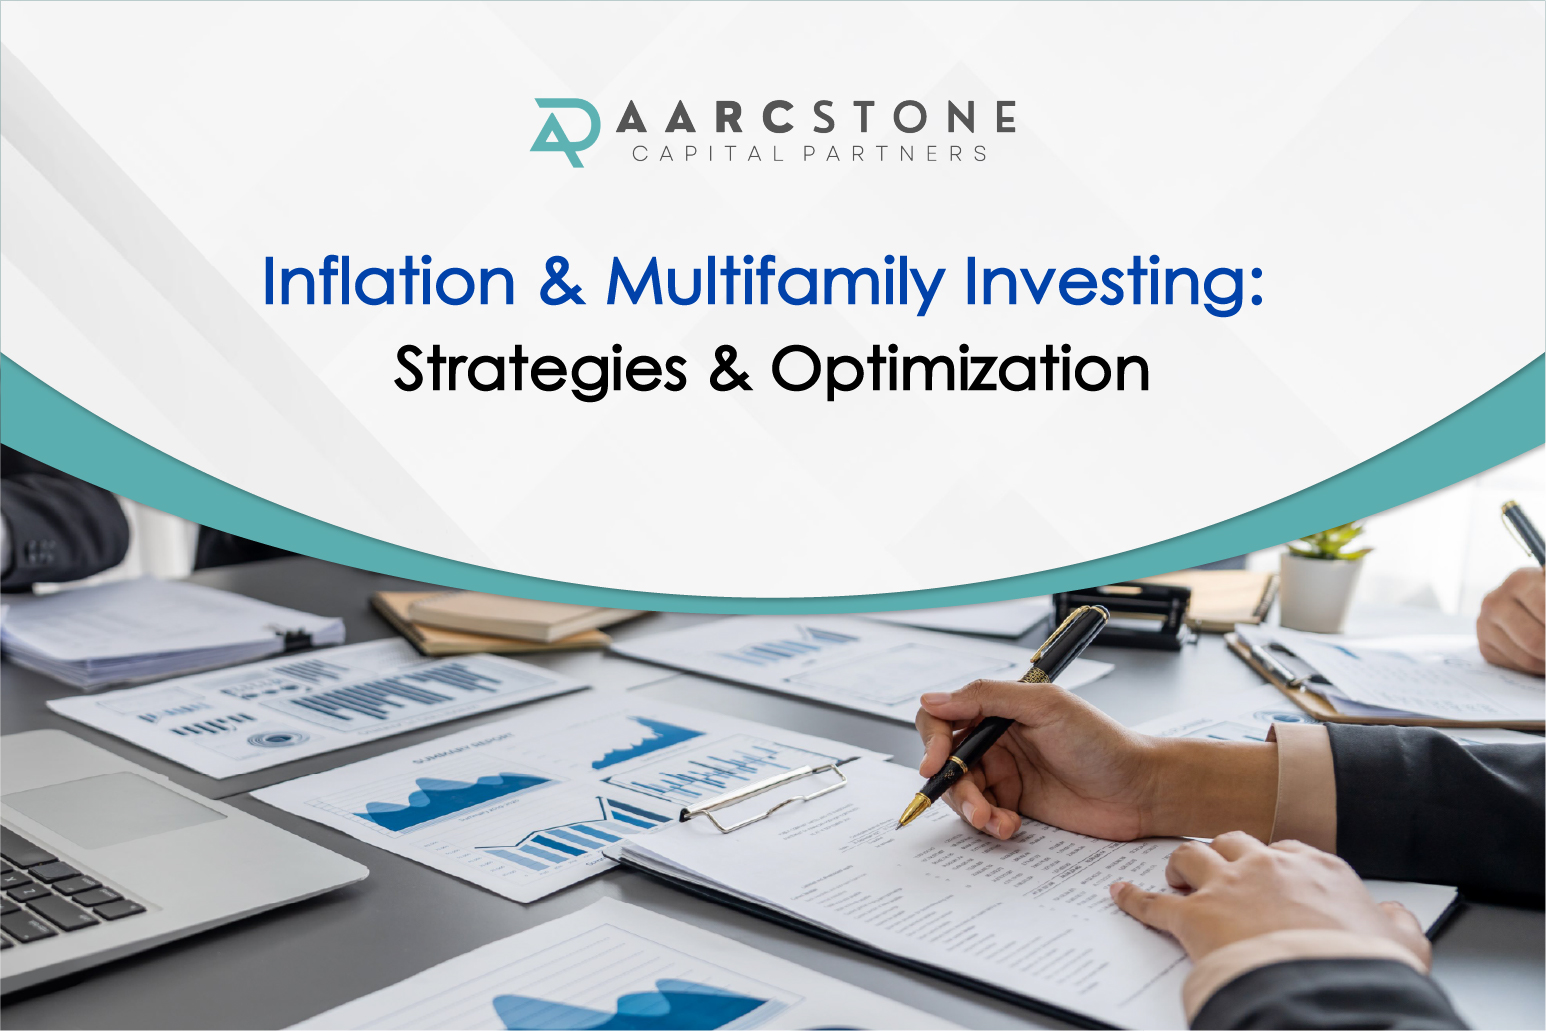 Inflation & Multifamily Investing Strategies & Optimization